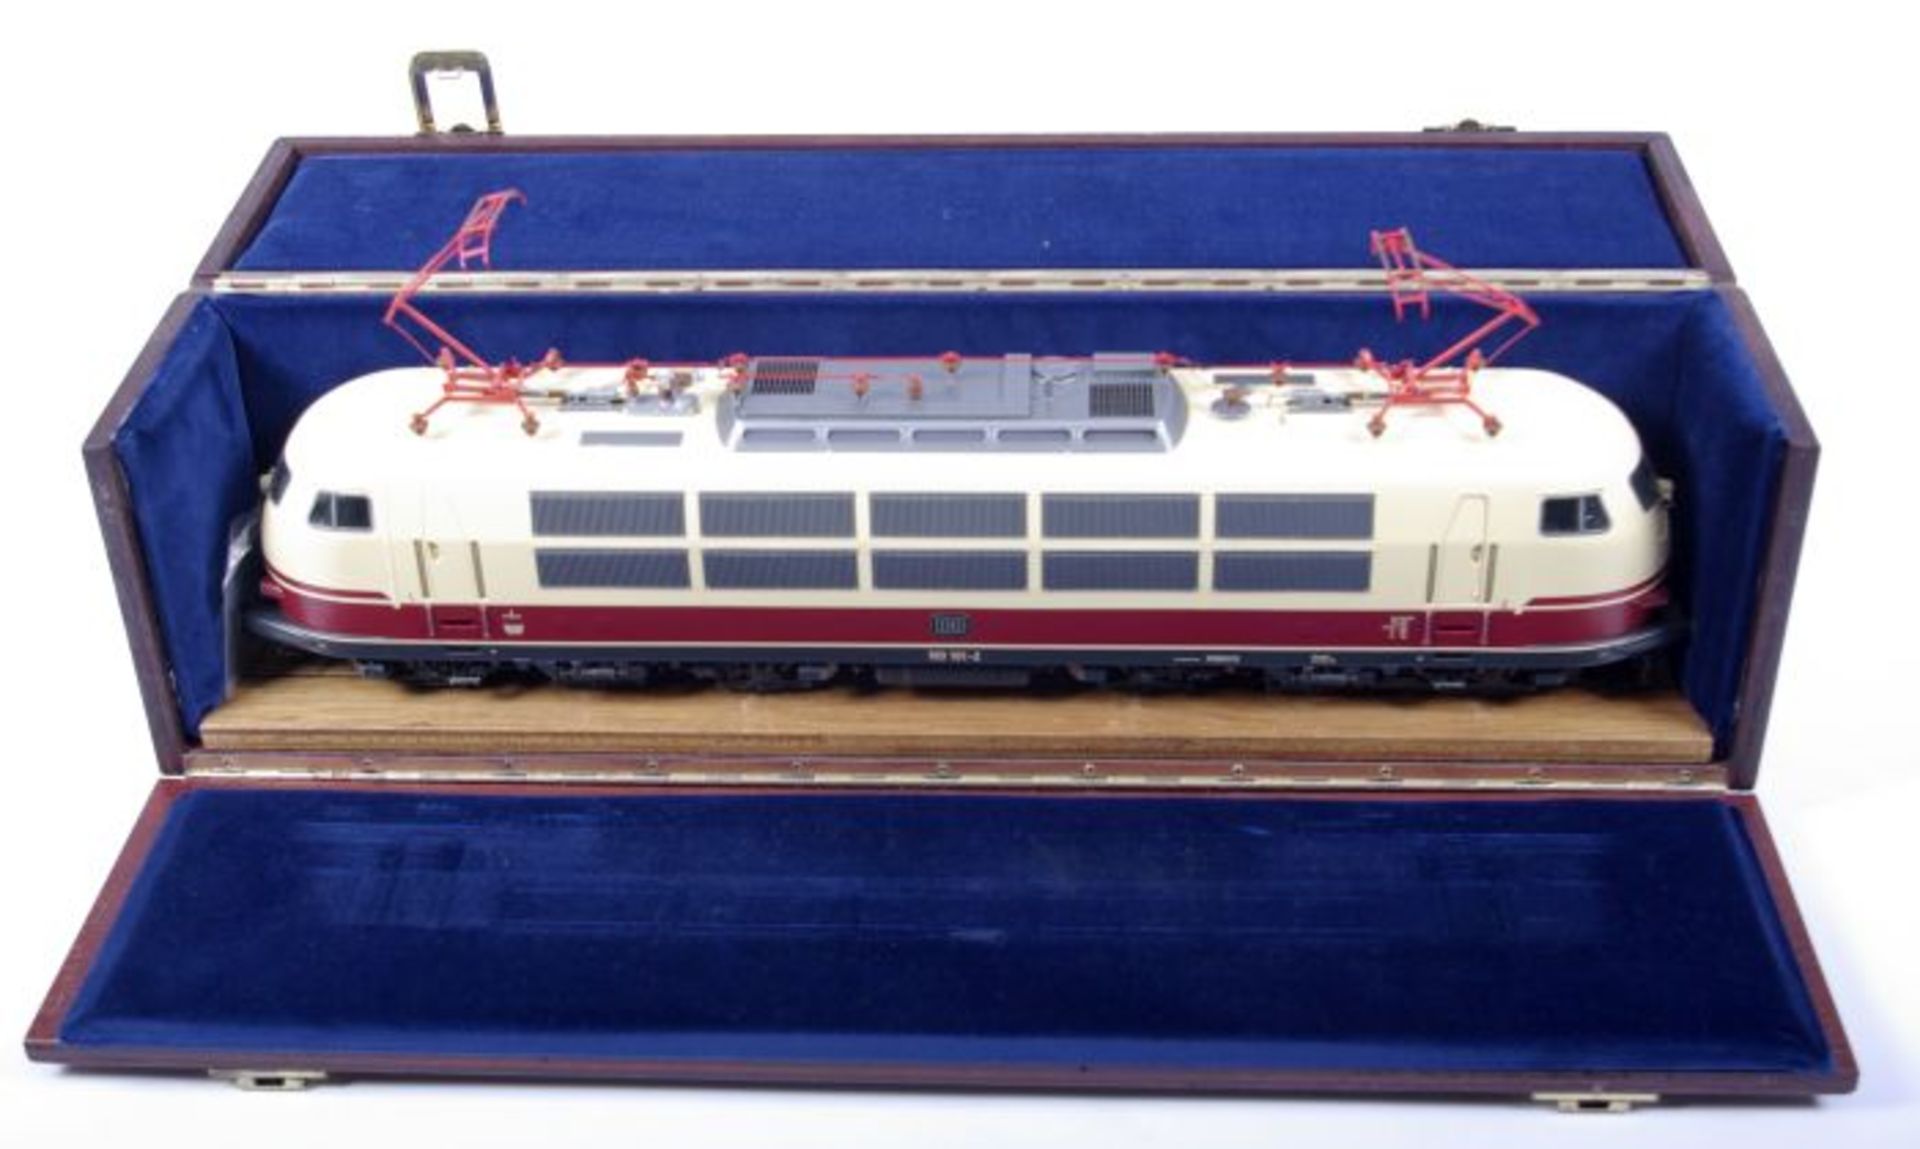 Modell Lokomotive Spur 0 in TransportboxPullman Waggonbau, Bomlitz, Ende 20.Jh., Modell DB-103-101-